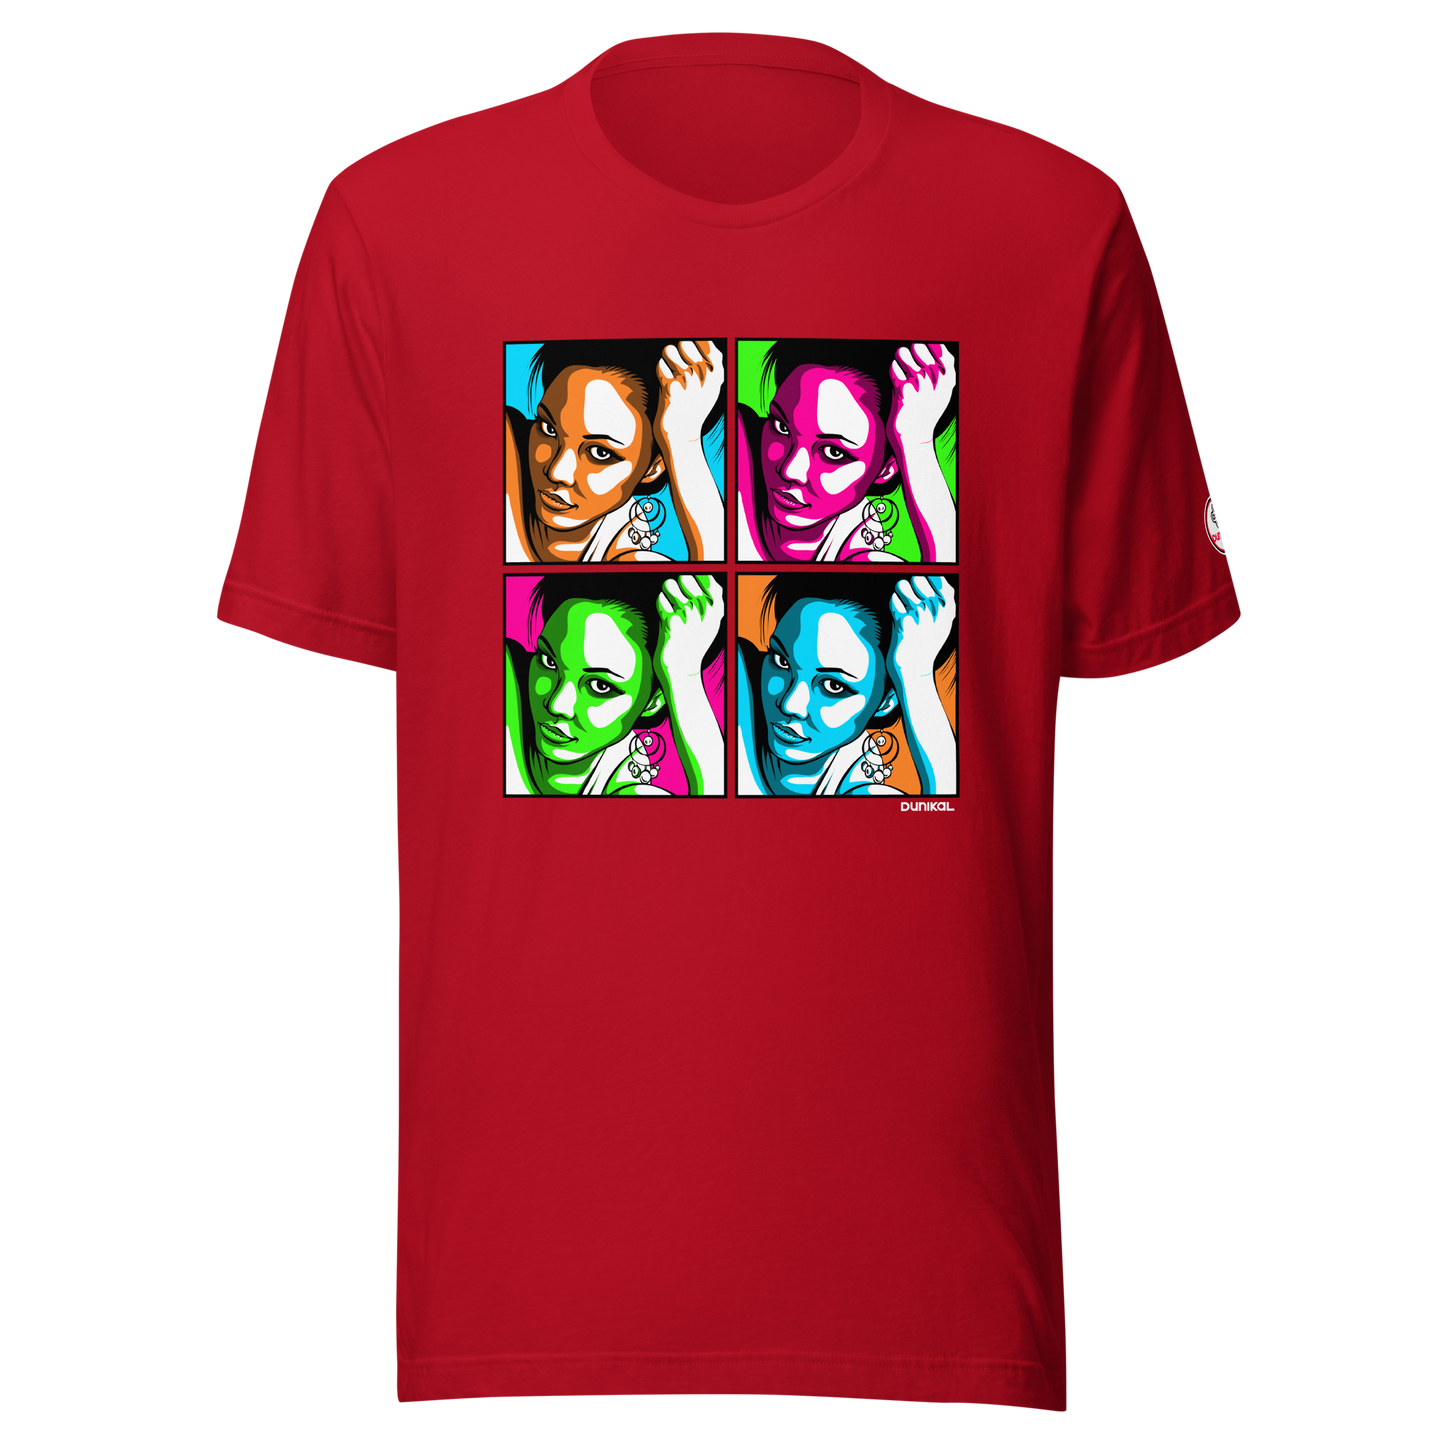 Unisex t-shirt ❯ Femme fatales wear Crayola ❯ Neons